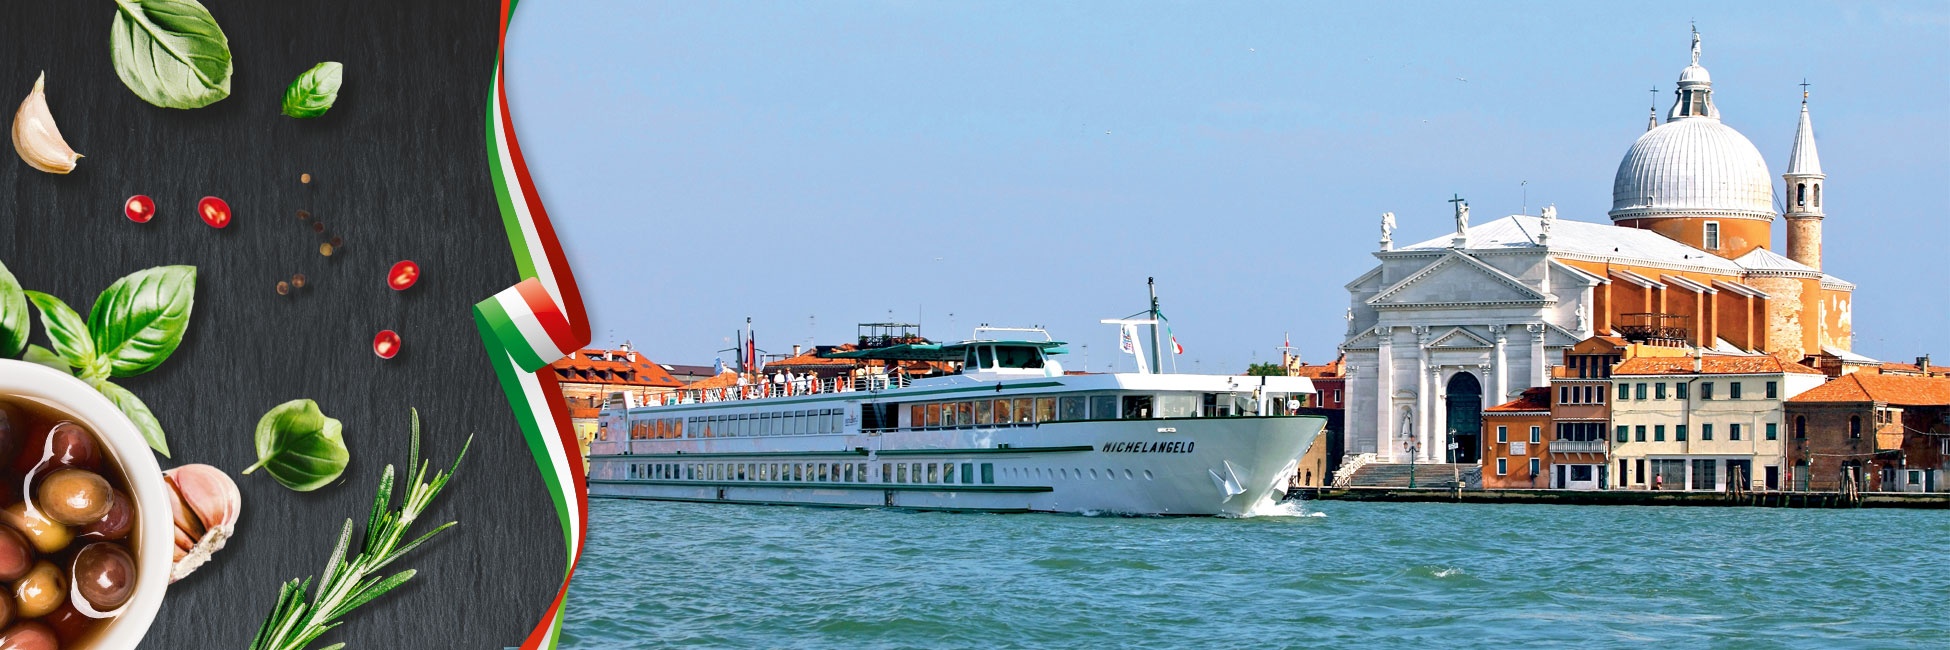 VEN_SAVPP - Venecia y su laguna, ¡CroisiEurope rinde homenaje a Italia!